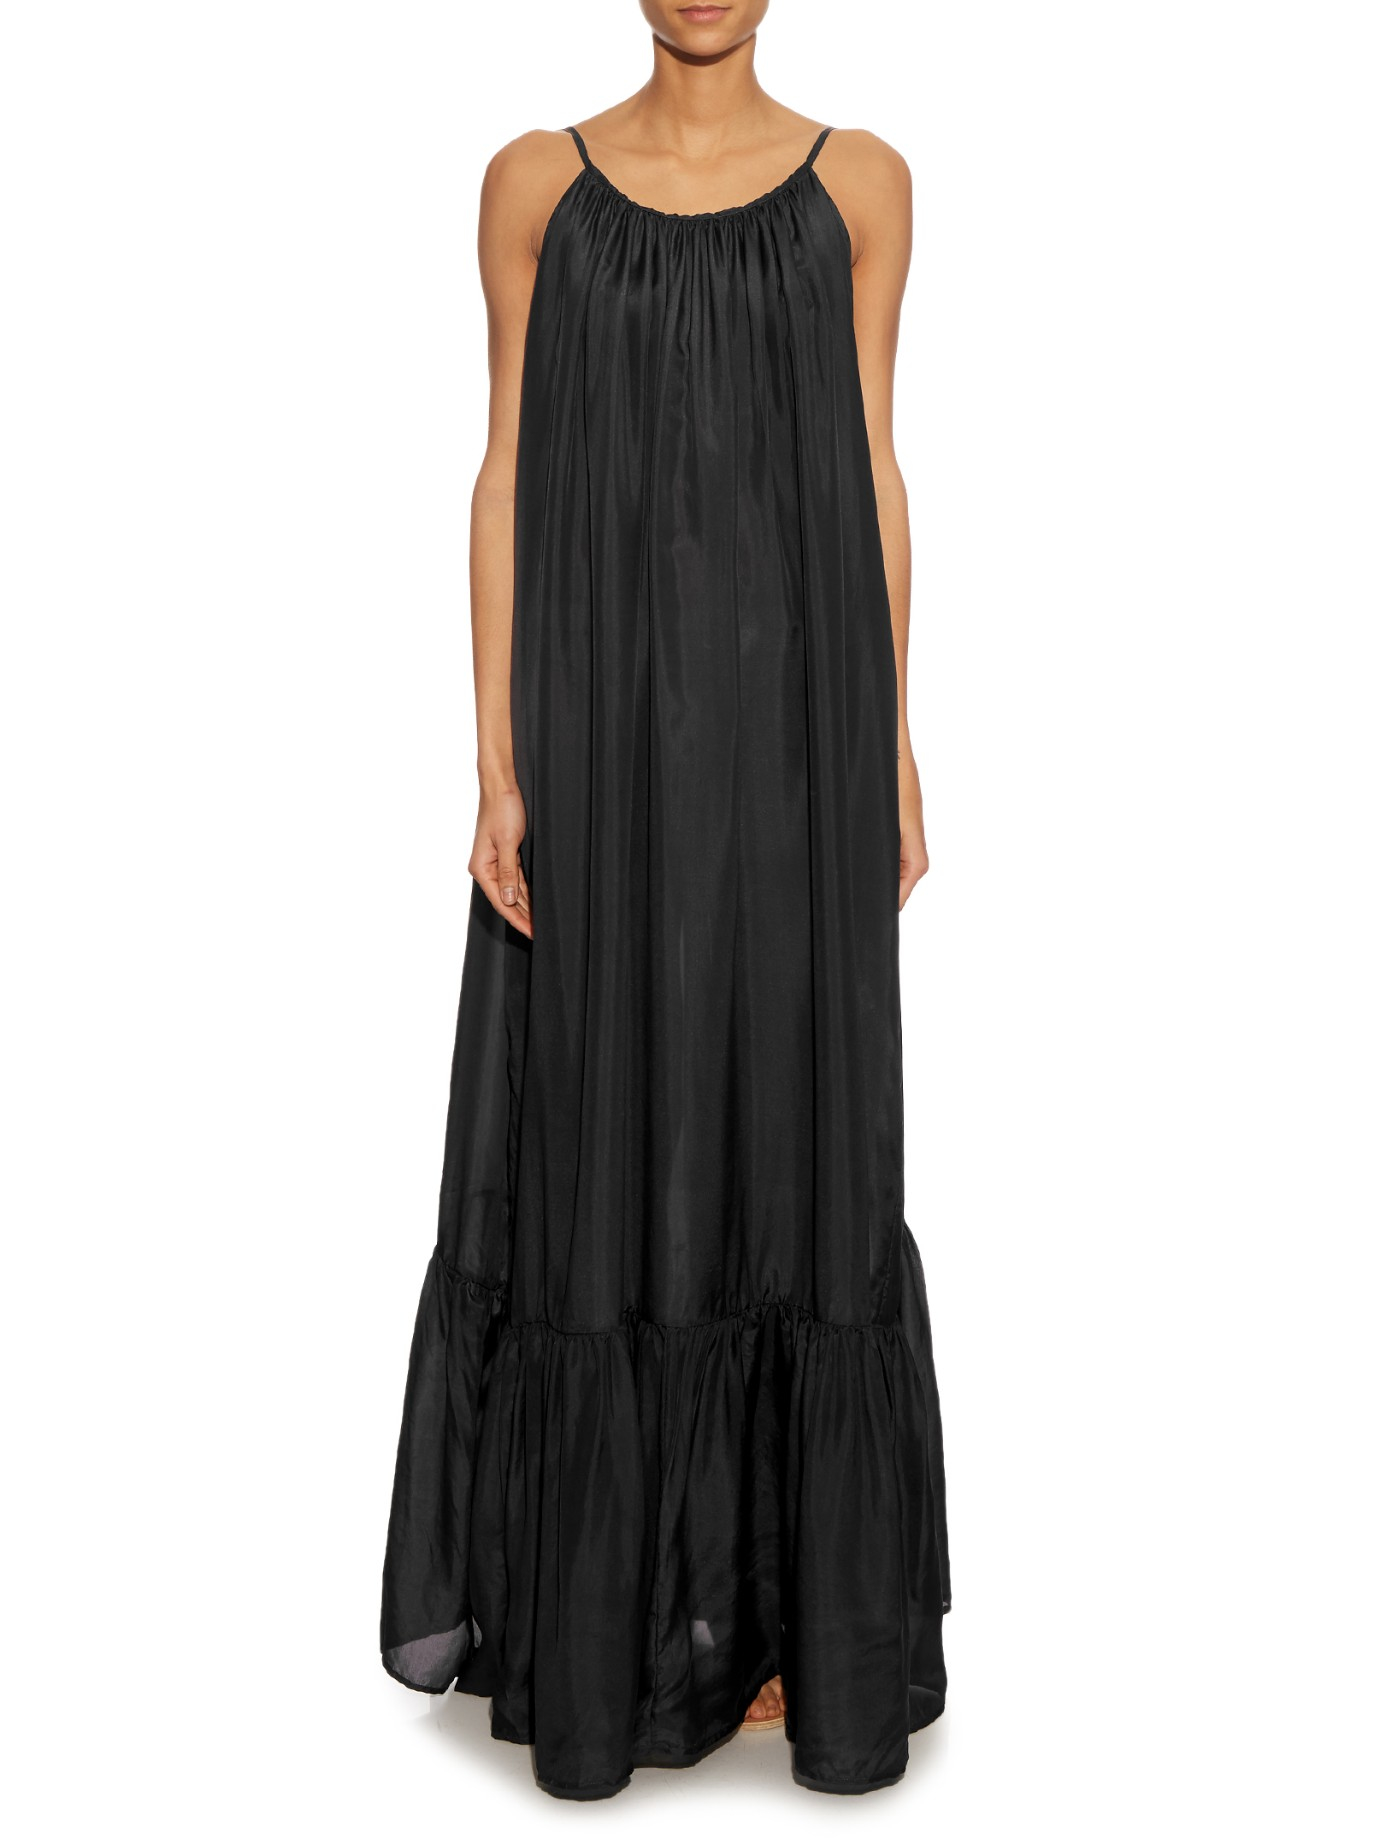 Lyst - Kalita Brigitte Silk-habotai Maxi Dress in Black